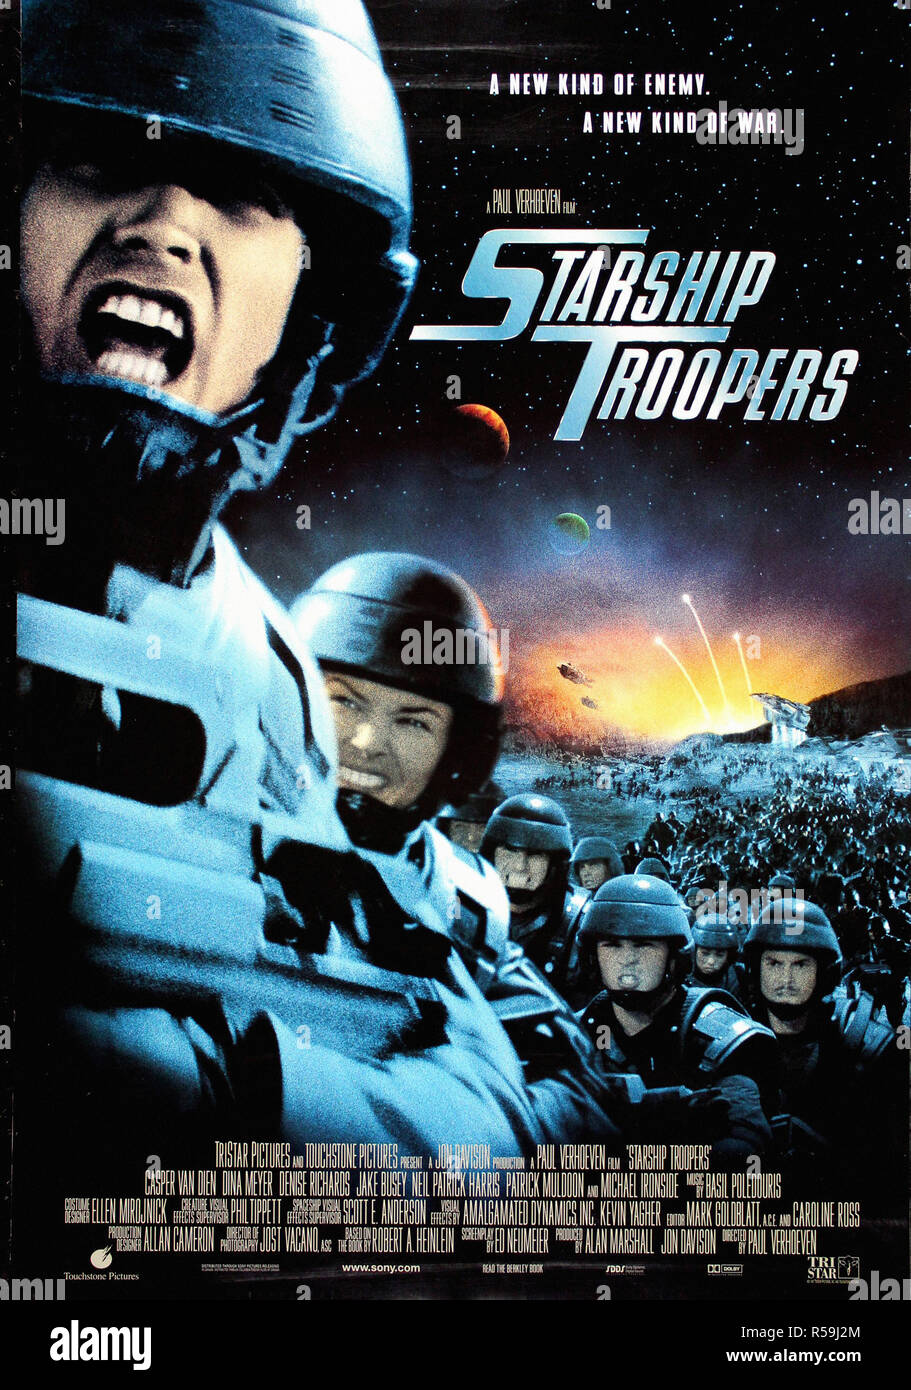 Starship Troopers - Original Movie Poster Stock Photo